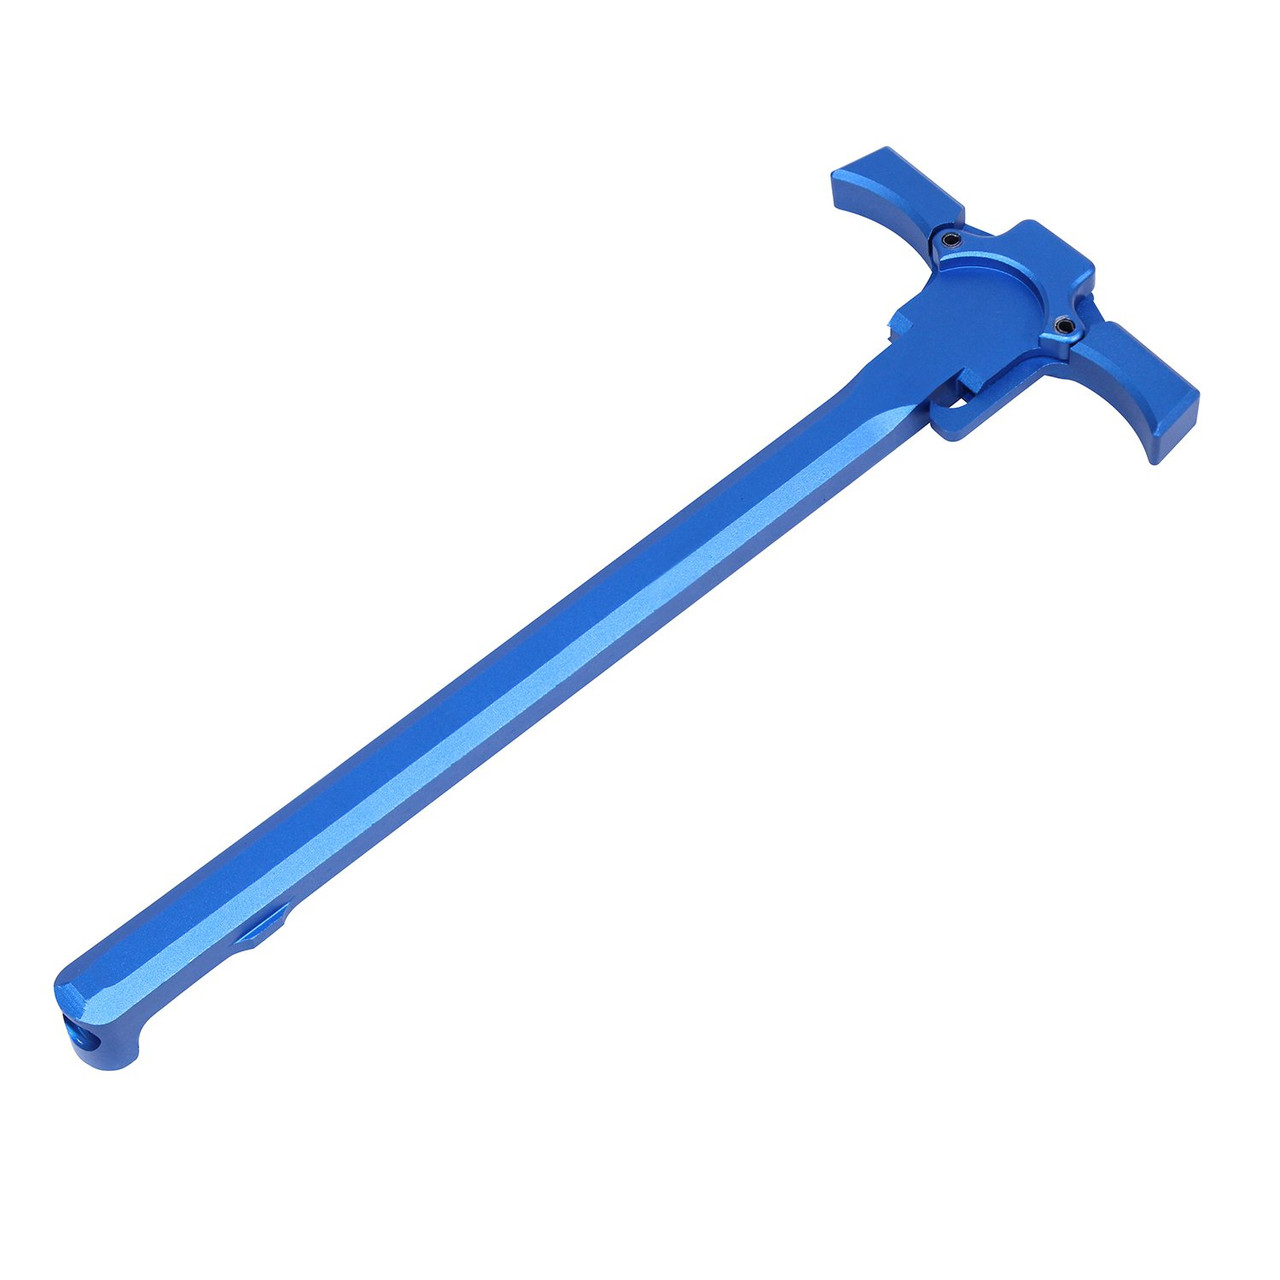 Guntec USA CHARGE-QE-BLUE AR-15 Ambidextrous "Quick Engage" Charging Handle (Anodized Blue)